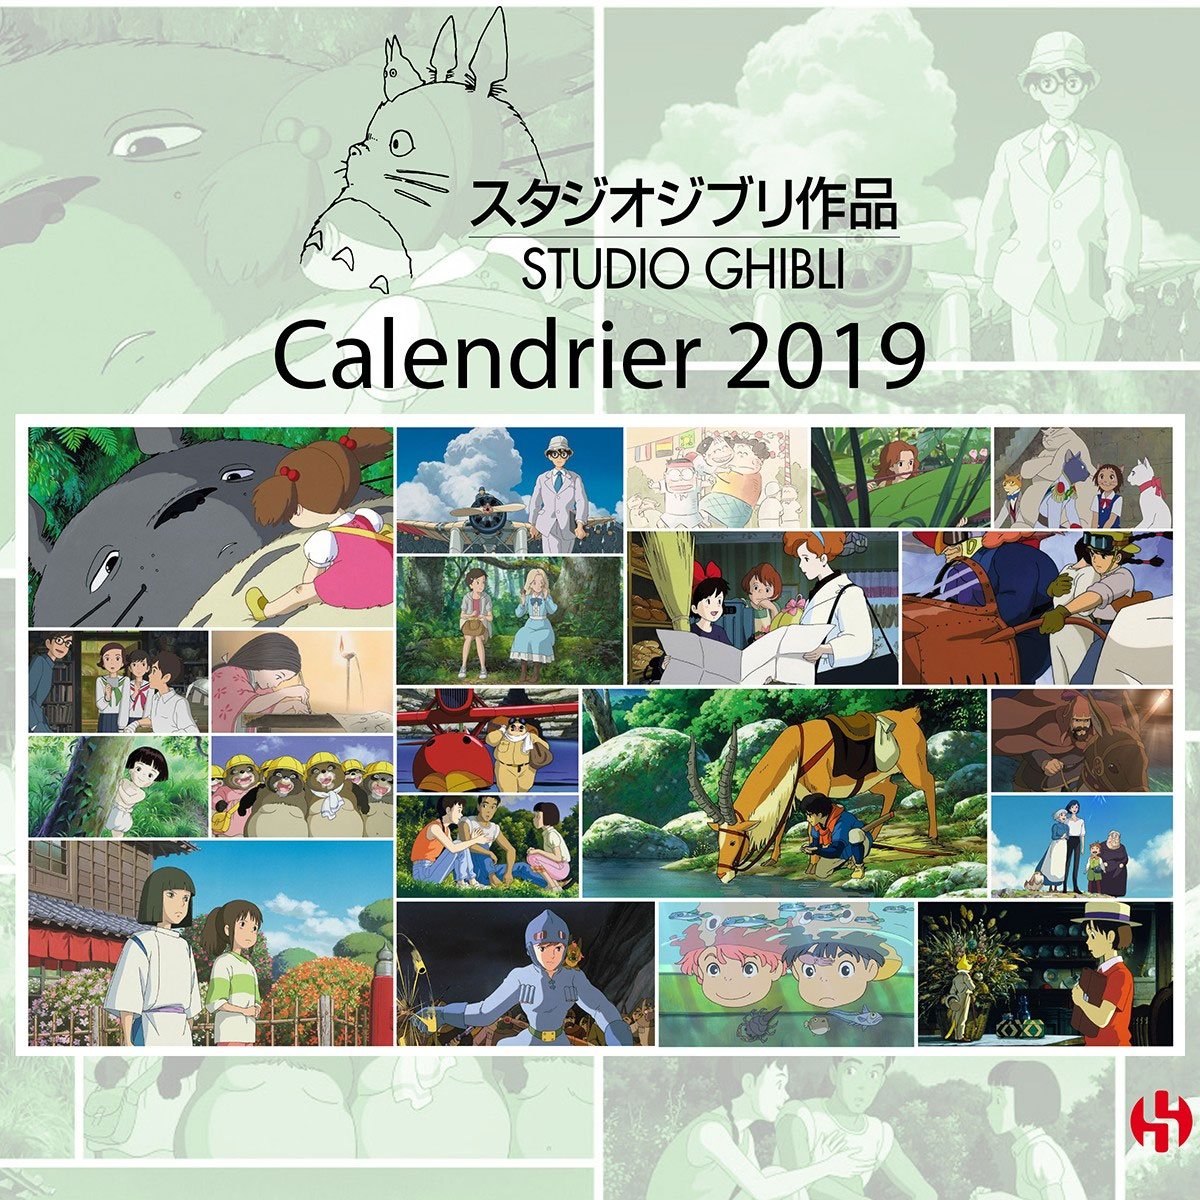 Studio Ghibli calendrier 2019 *FRANCAIS*